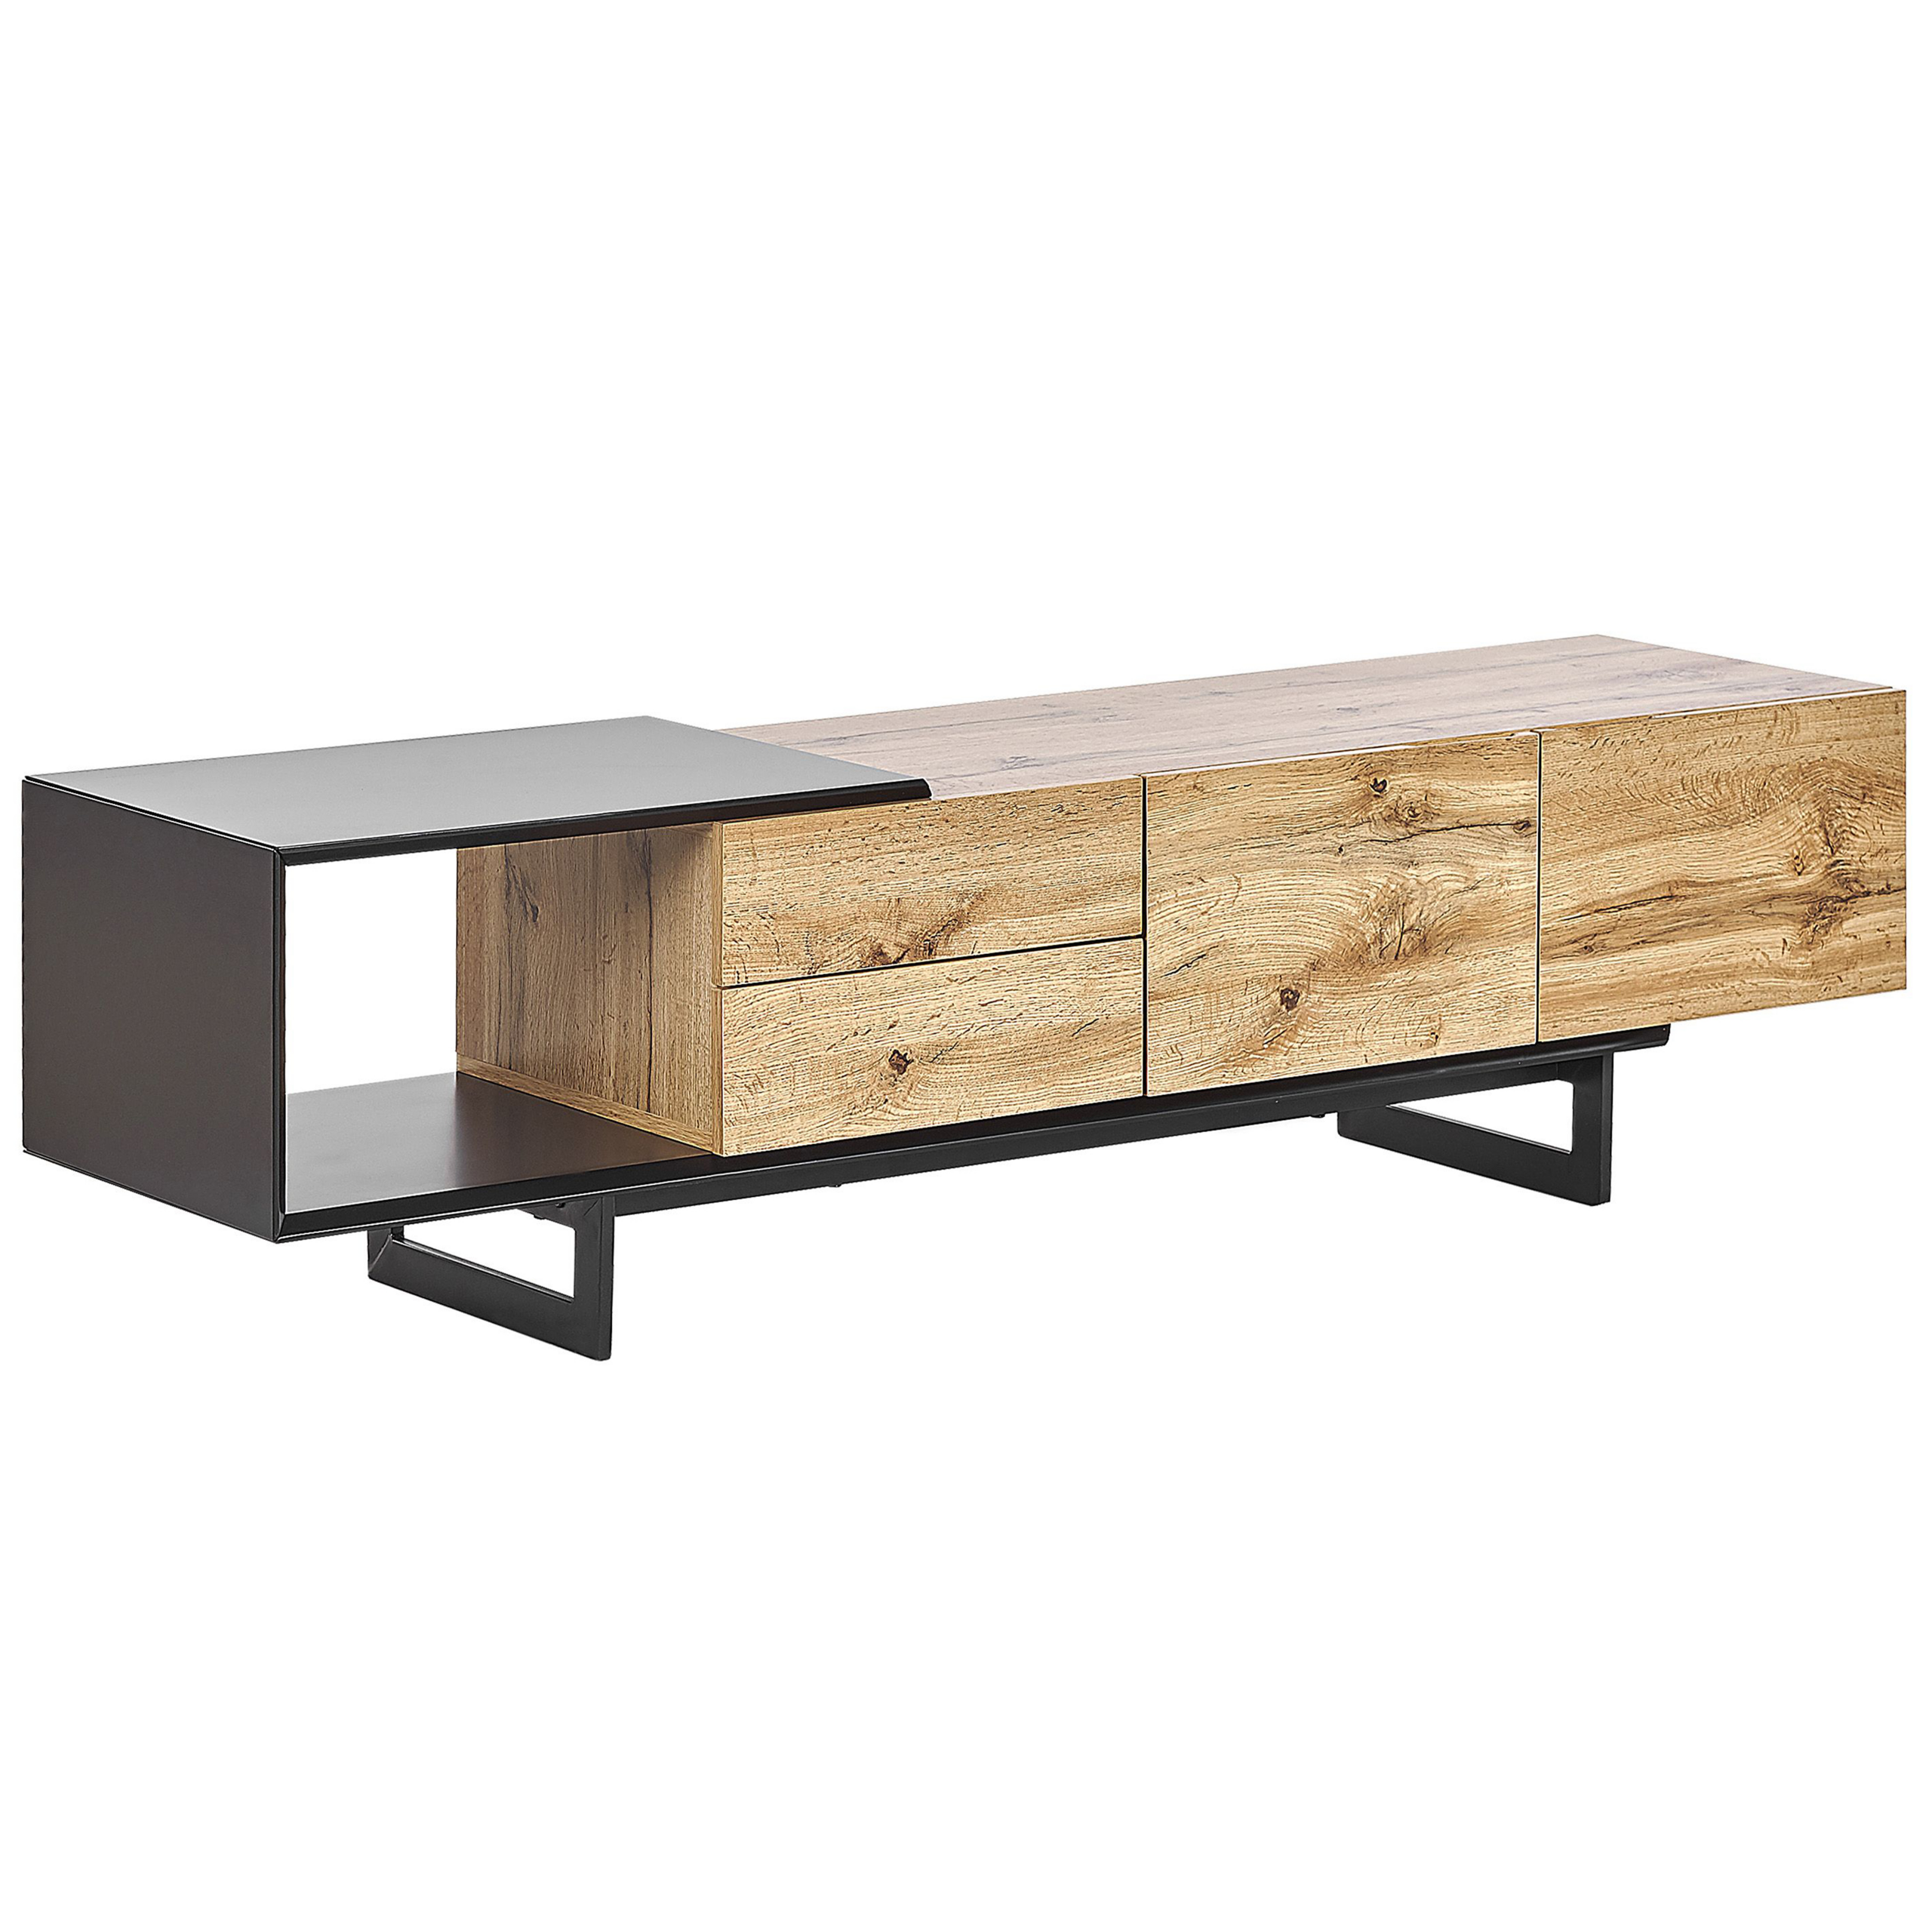 Beliani TV Stand Light Wood and Black MDF 160 cm Up To 70ʺ Drawers Shelves Modern Design